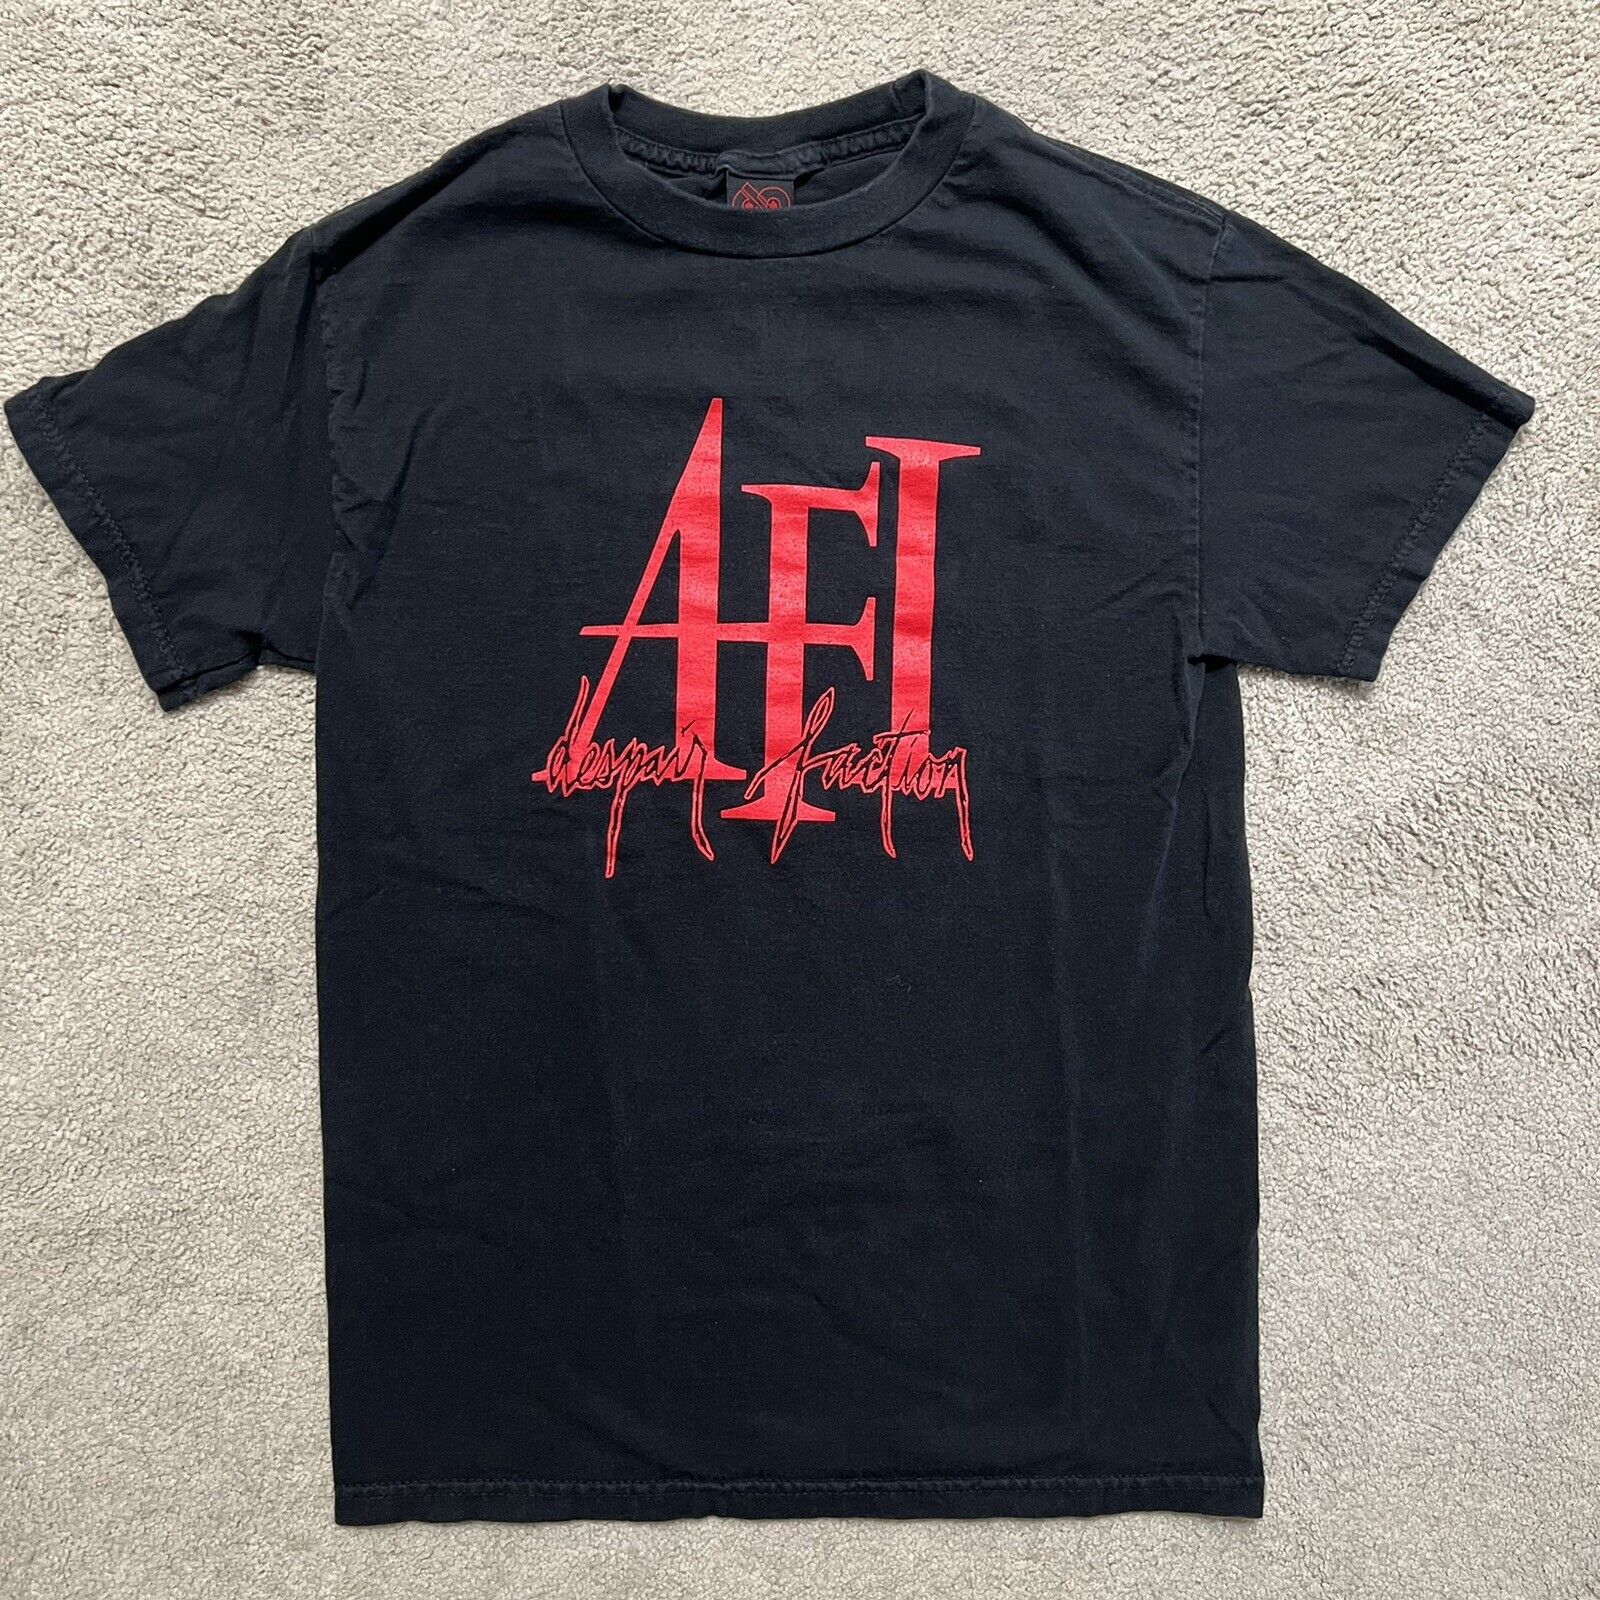 Afi Shirt Despair Faction Septemberunderground 2006 Tour Adult Small Used